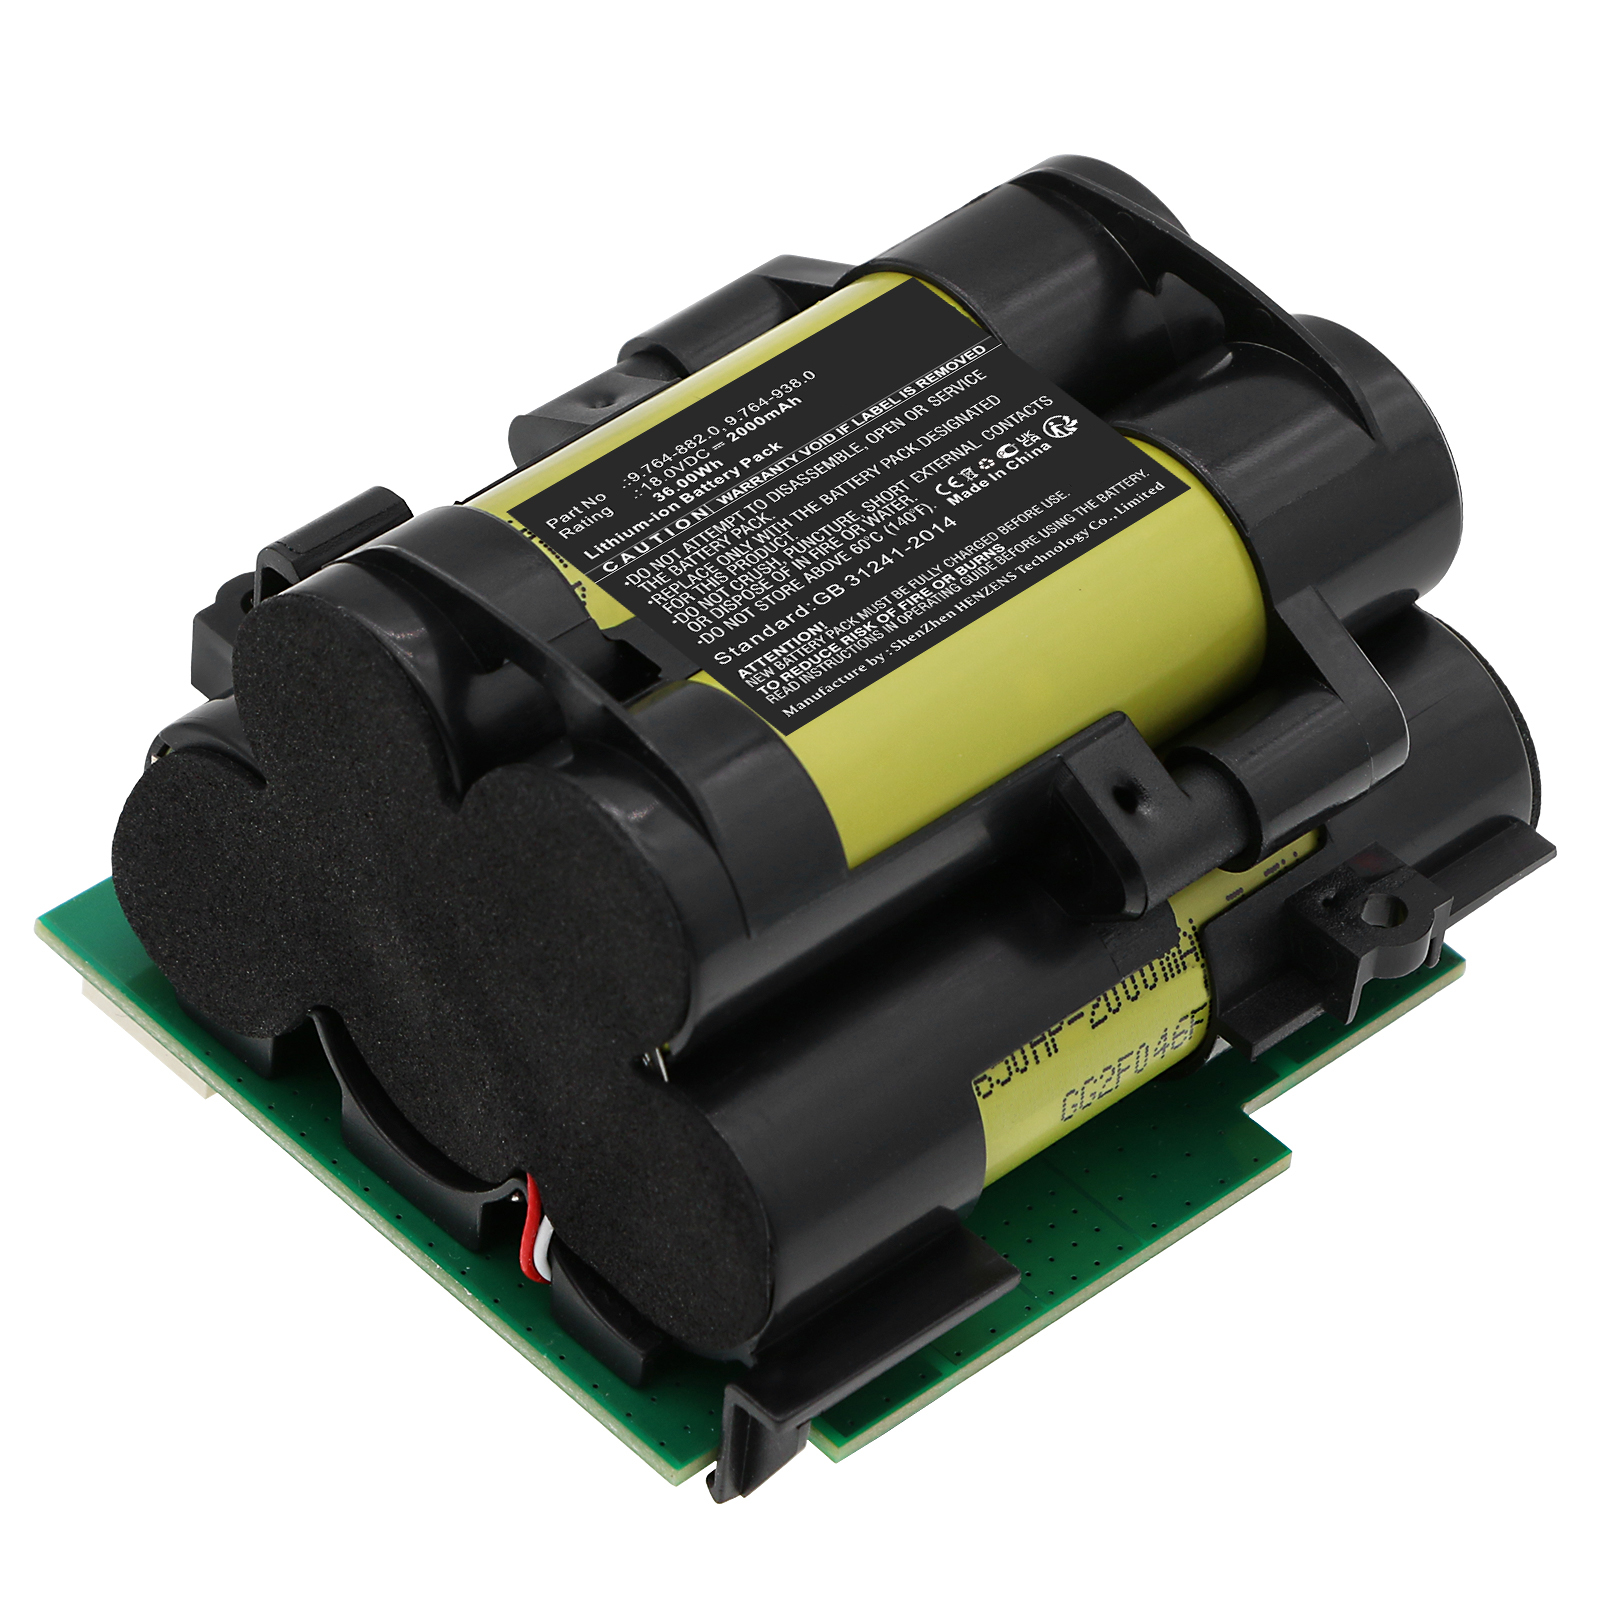 Synergy Digital Vacuum Cleaner Battery, Compatible with Karcher 9.764-882.0 Vacuum Cleaner Battery (Li-ion, 18V, 2000mAh)